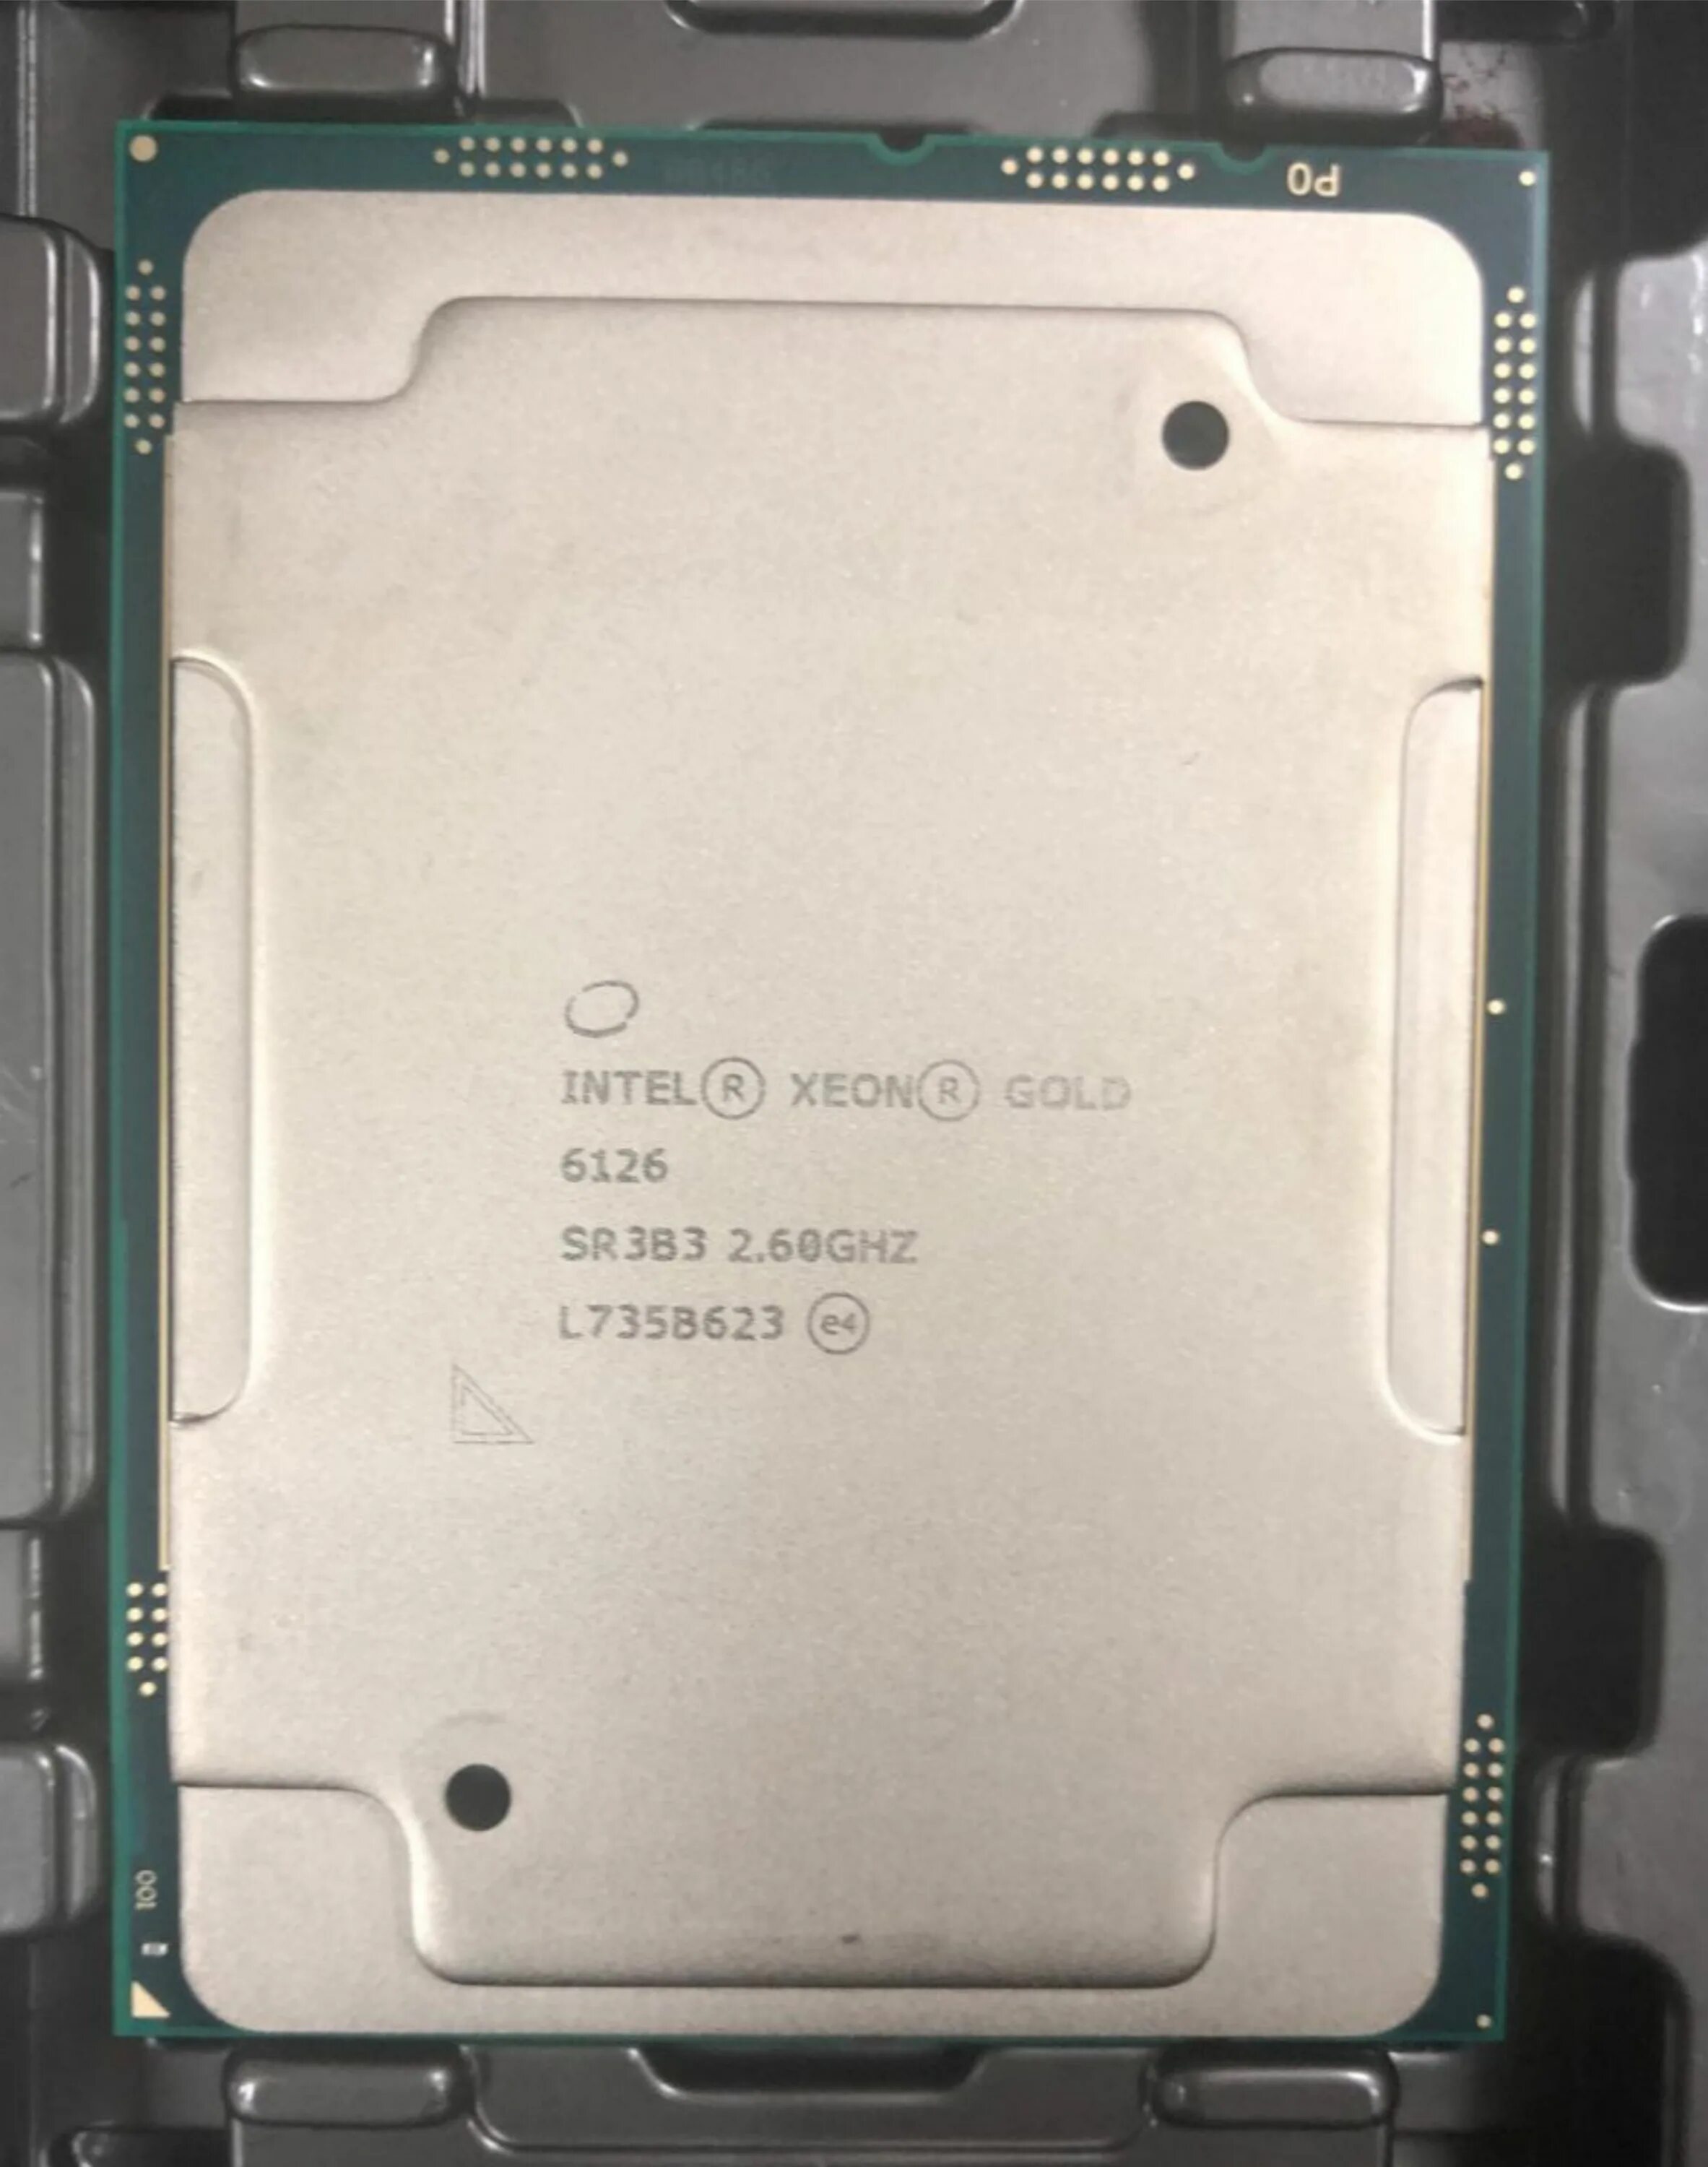 Intel Xeon Gold 6126. Dell Xeon Gold 6126. Intel Xeon Gold. Xeon TDP 125w.